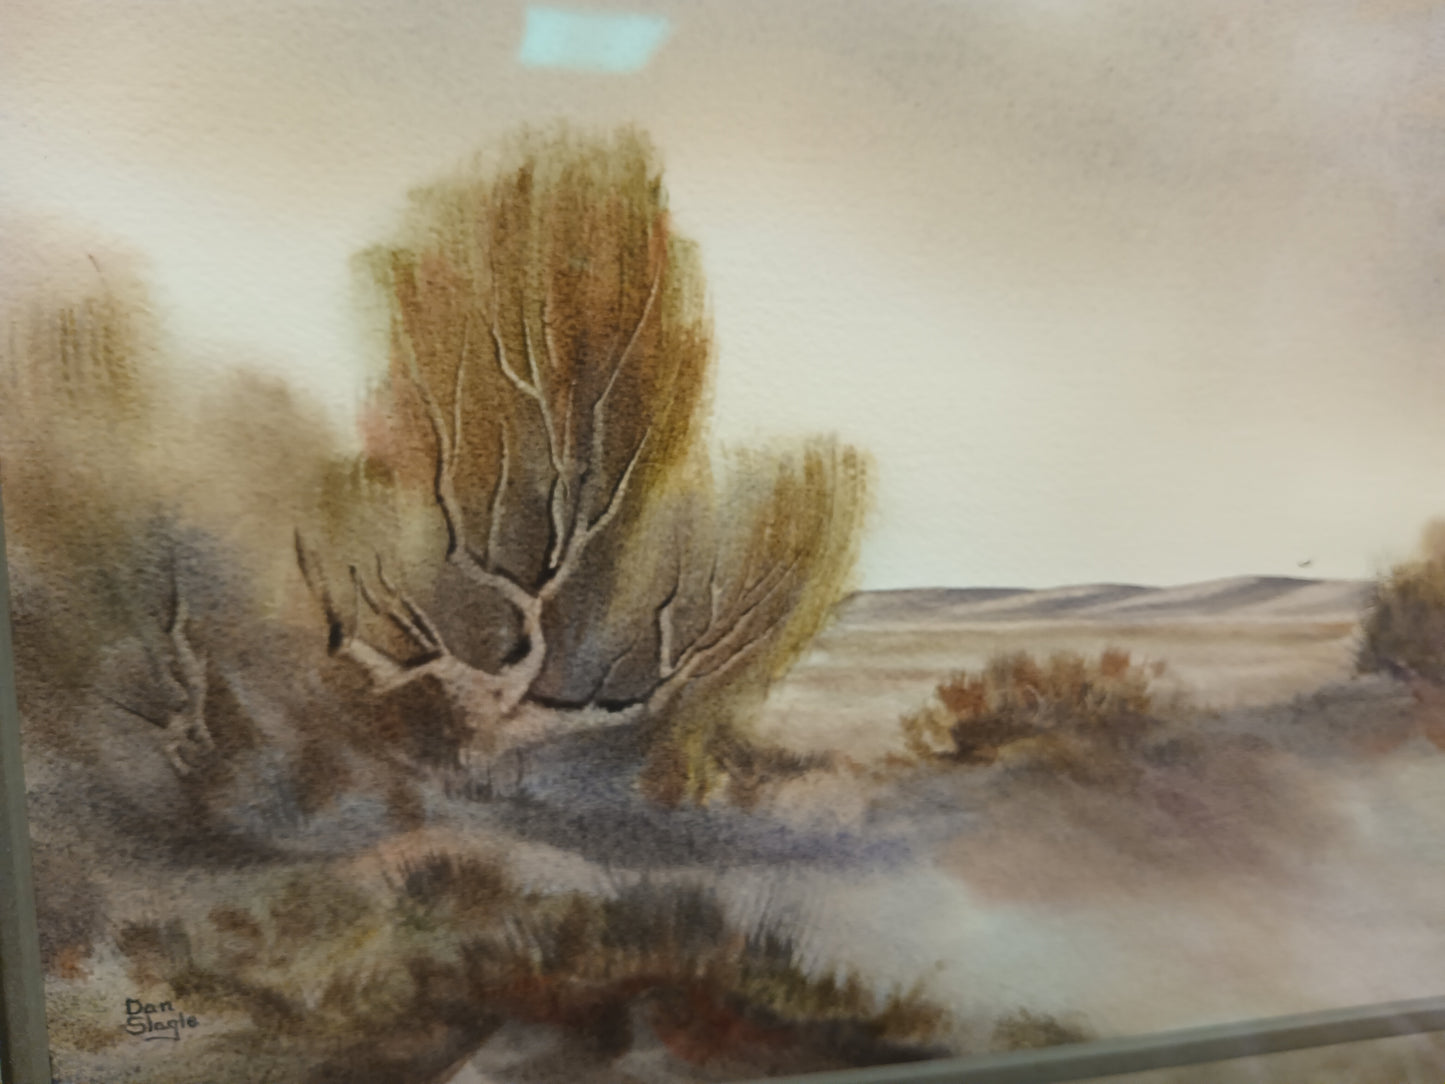 *Desert Scene Original Painting